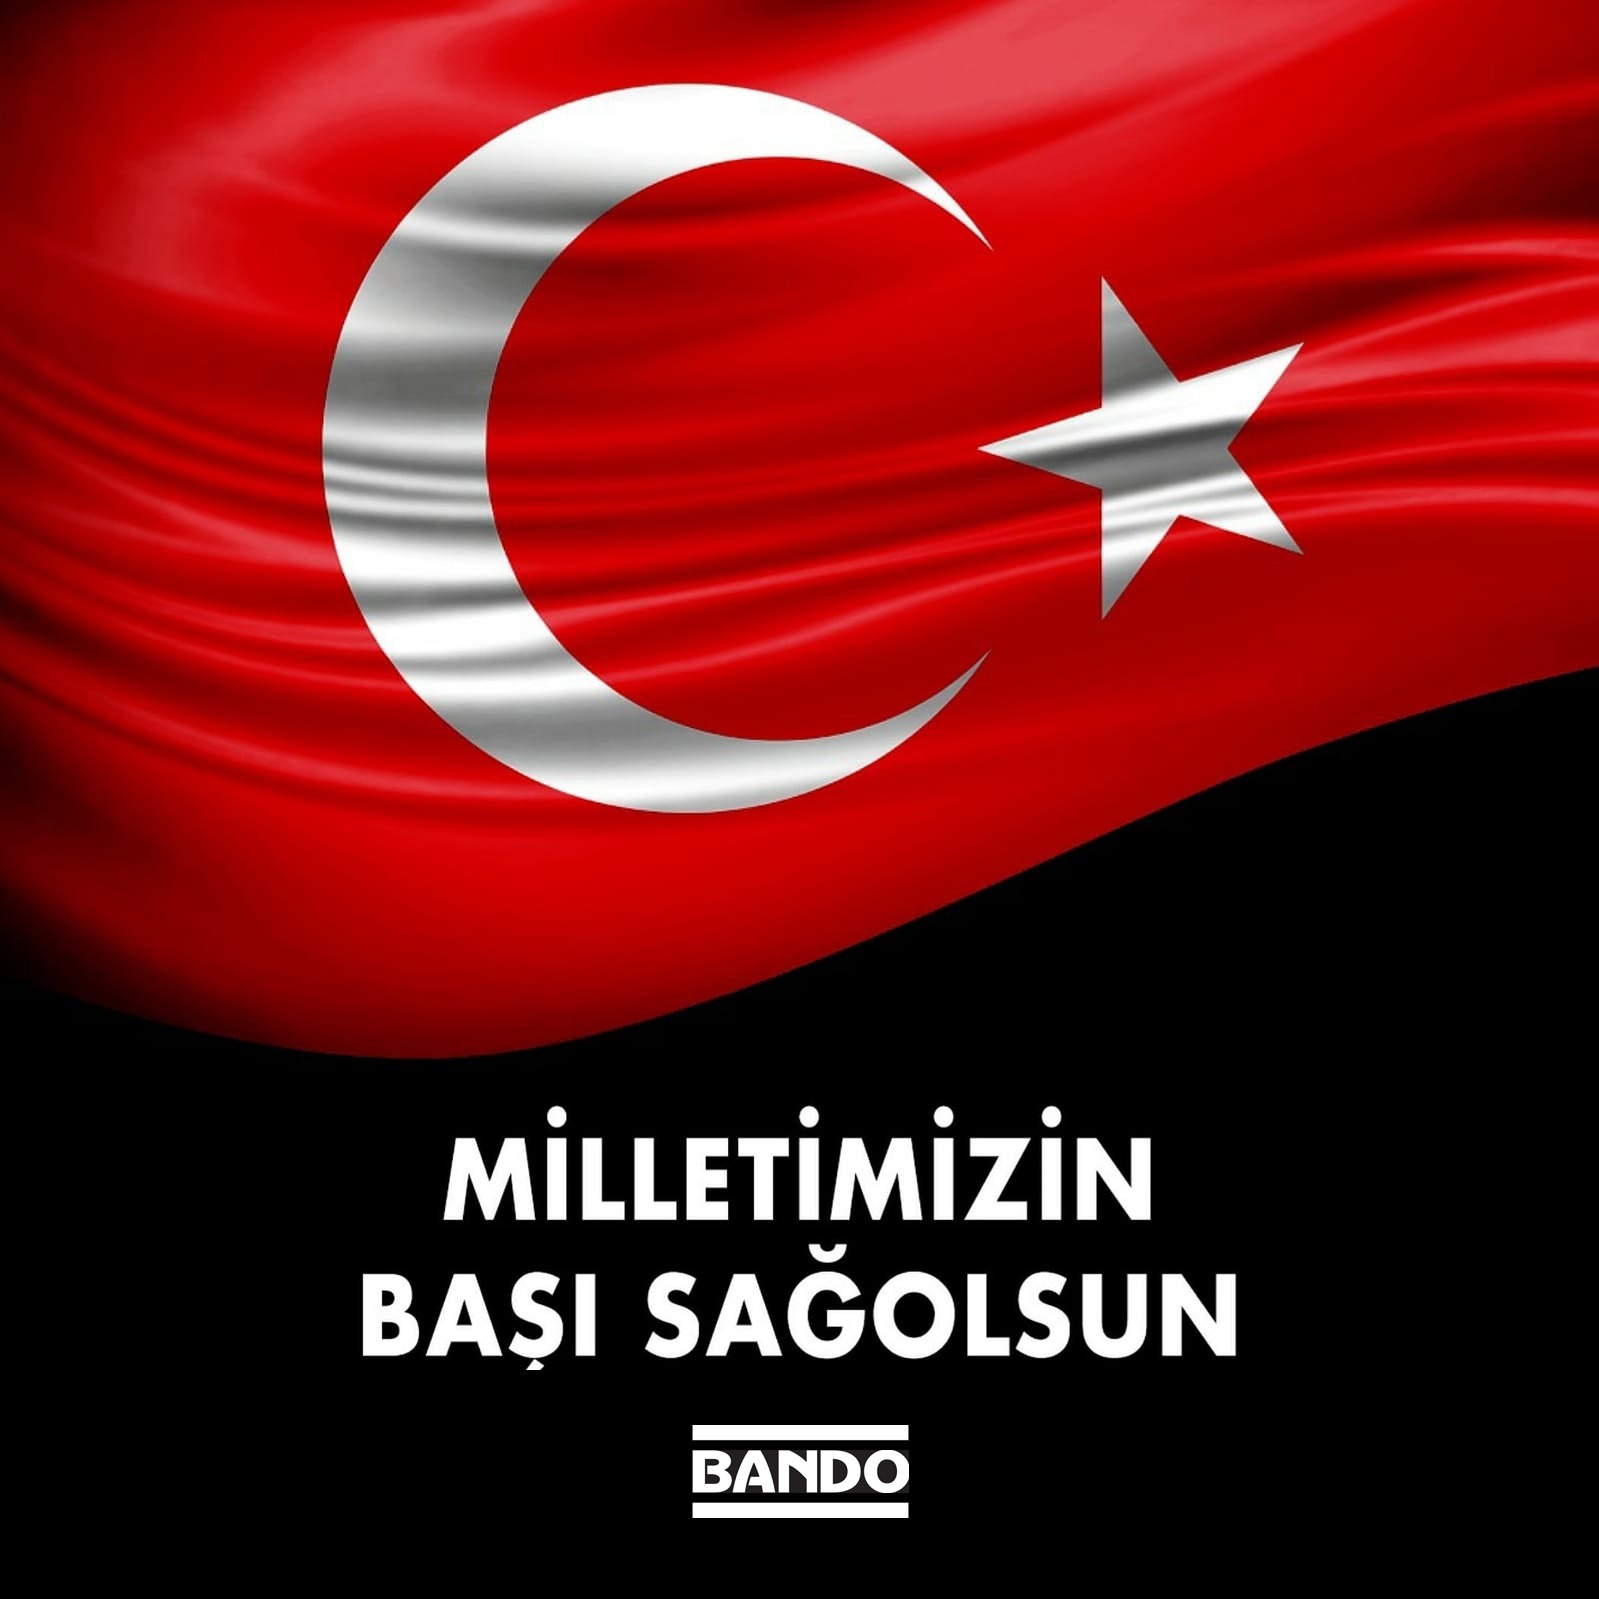 We condemn the treacherous terrorist attack in Taksim